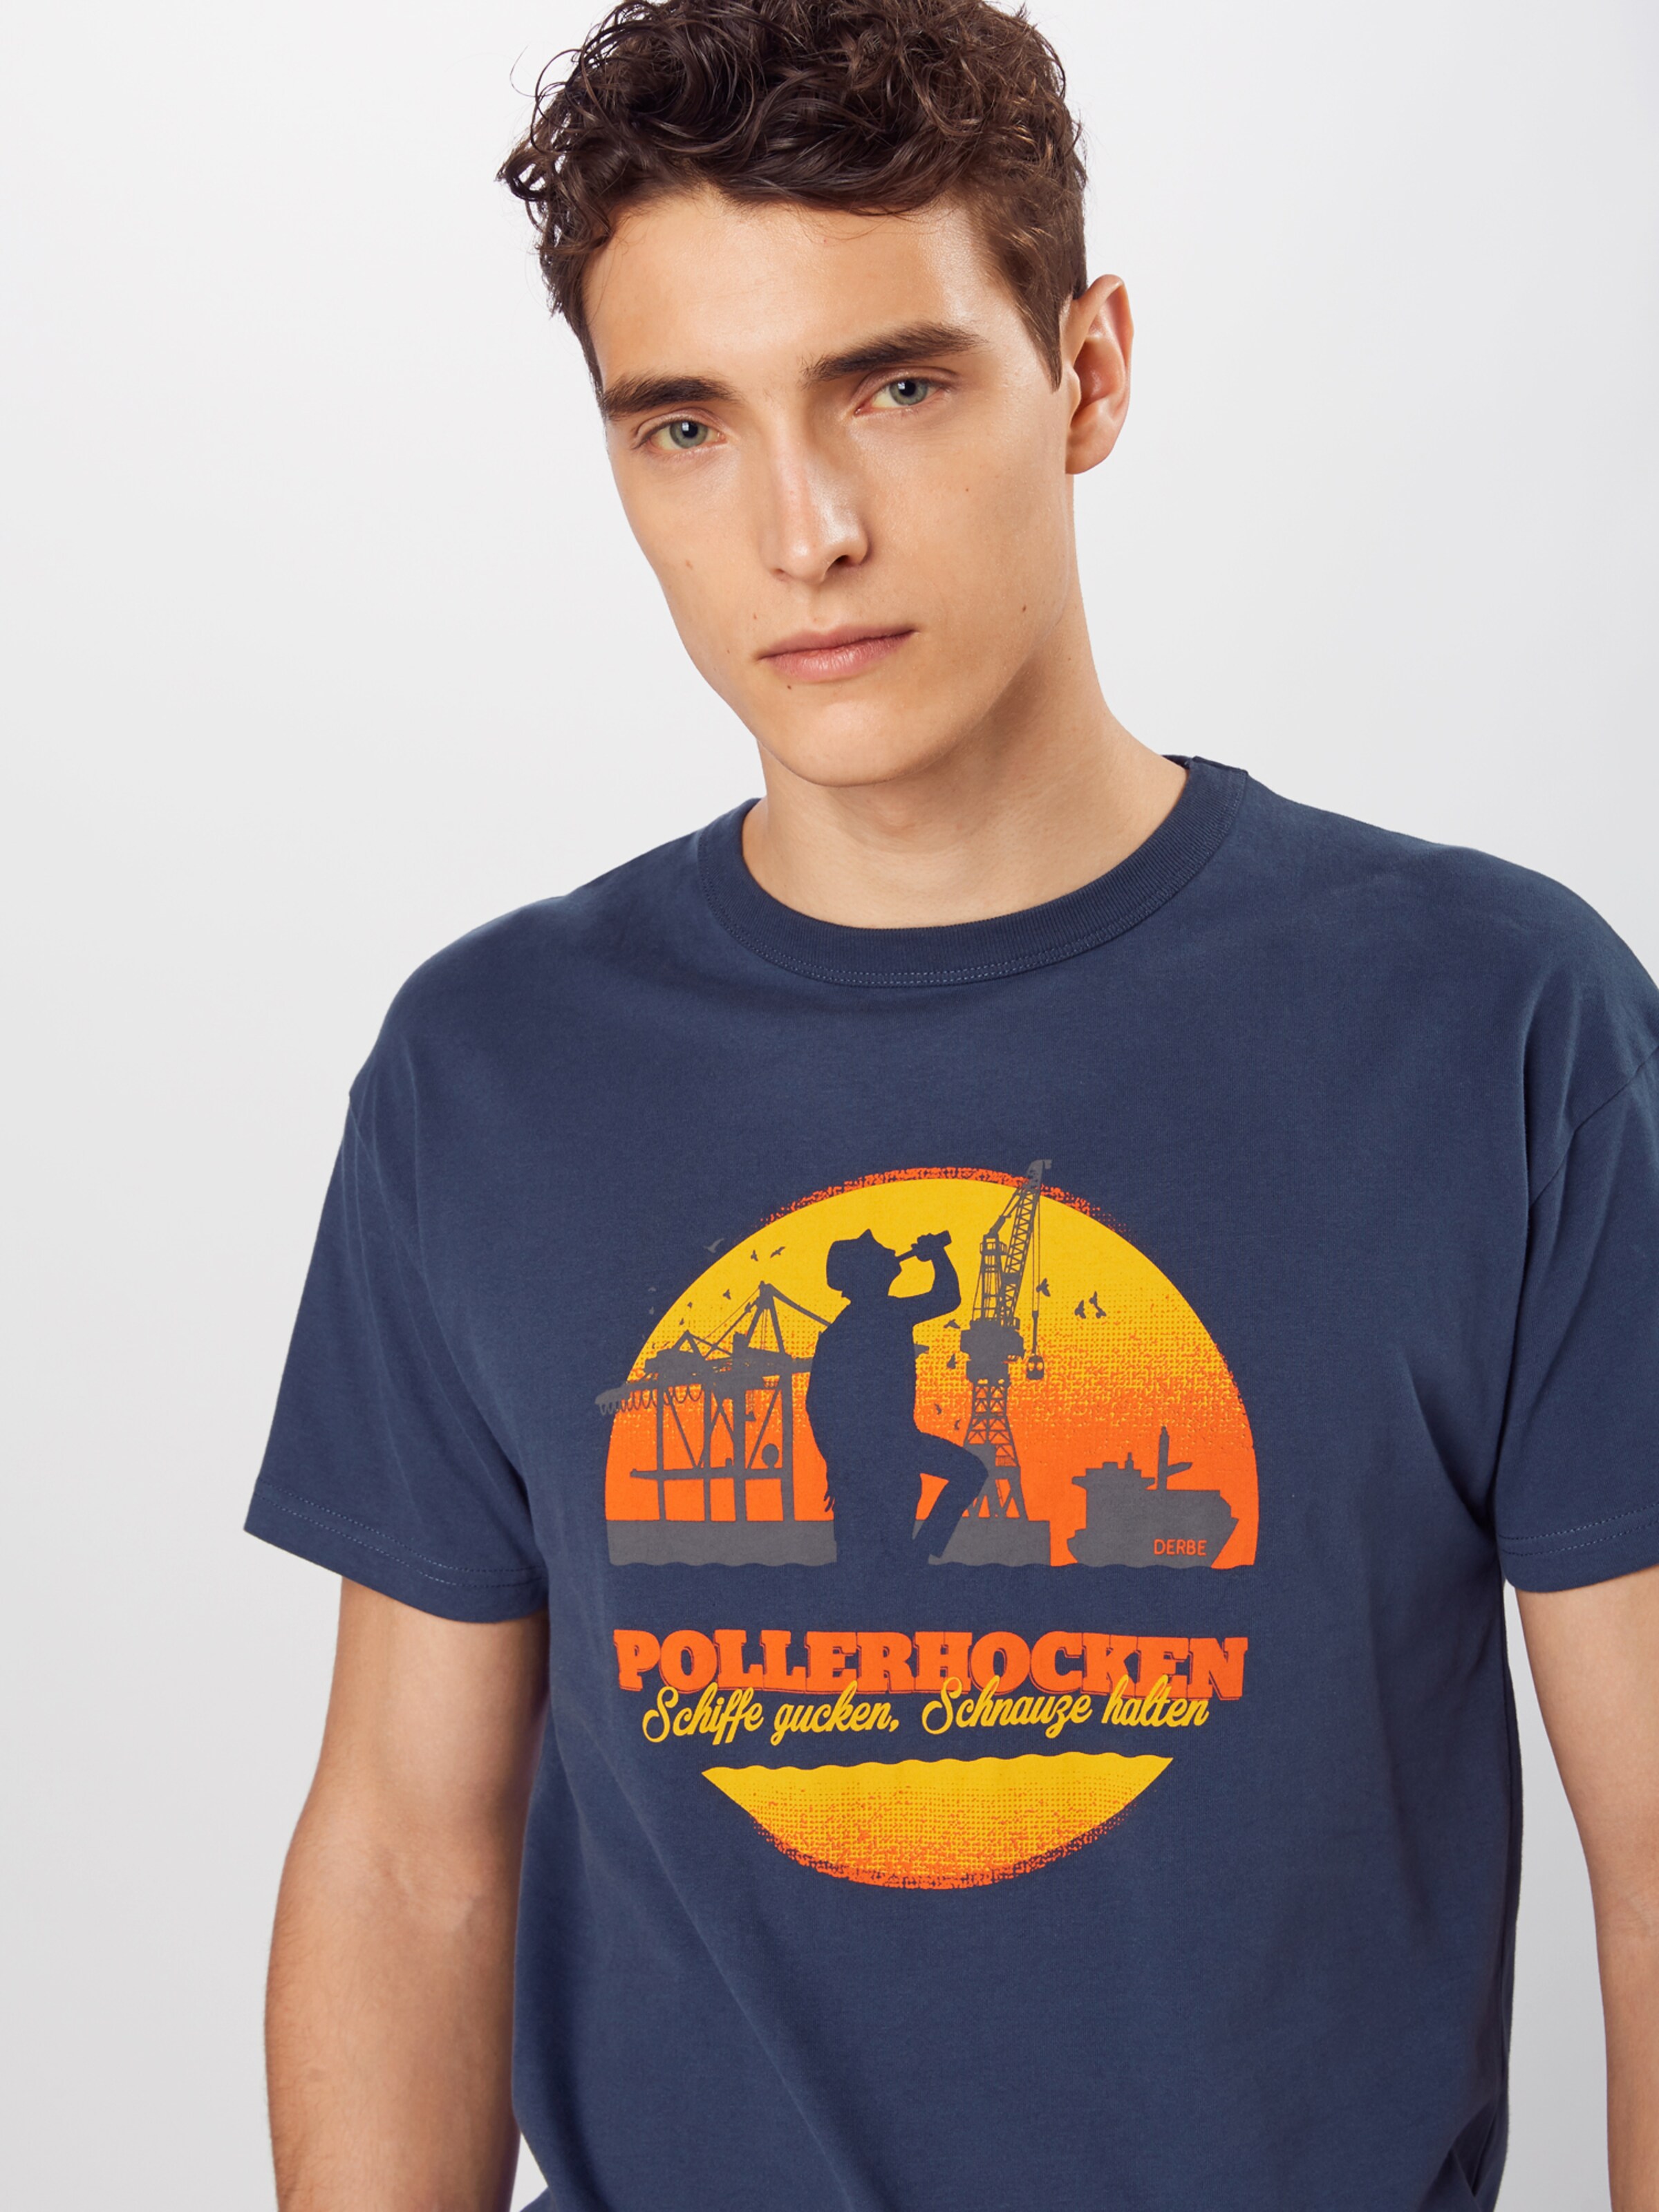 Plus durable T-Shirt Pollerhocken OC Derbe en Bleu Marine 